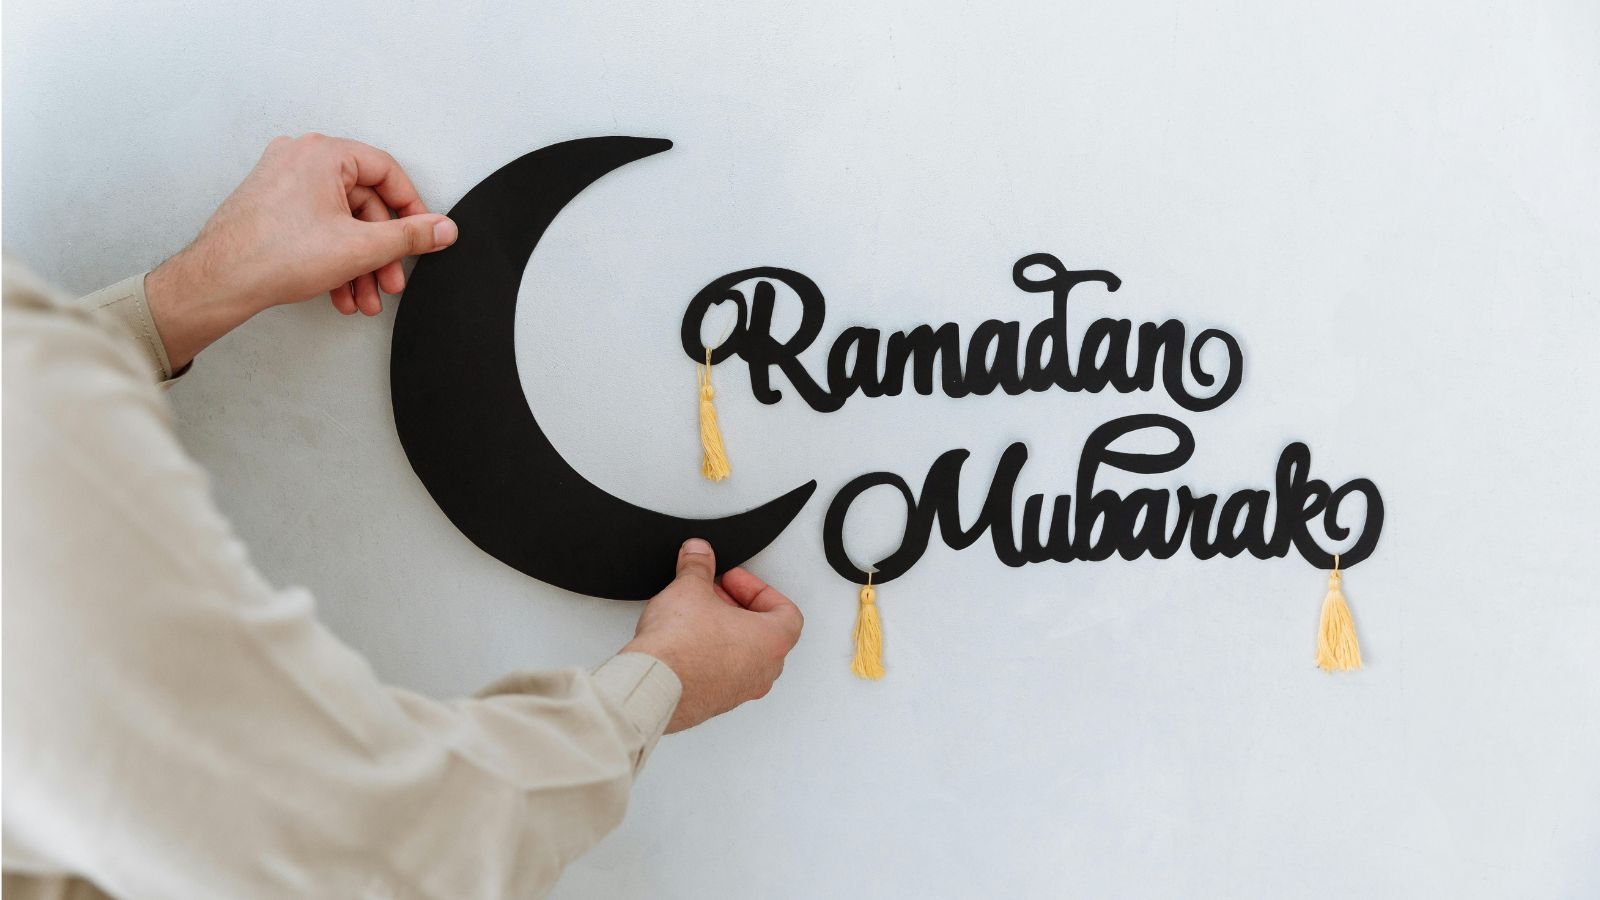 Mann hängt Schriftzug "Ramadan Mubarak" an die Wand, ein Mond ist auch dabei